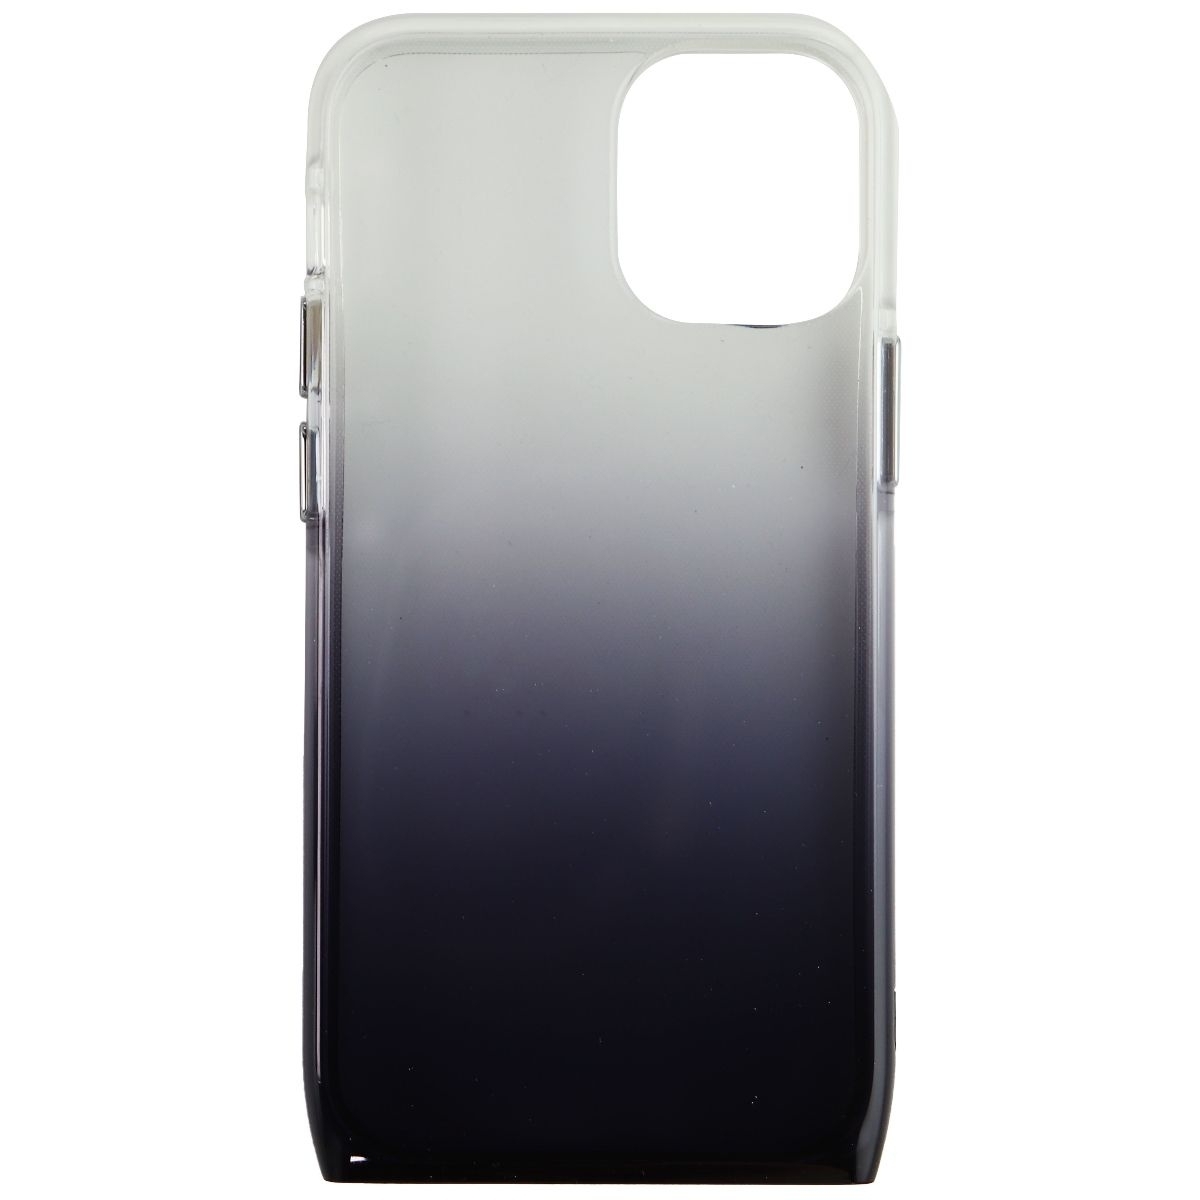 Bodyguardz Harmony Series Case For IPhone 12 Mini - Shade